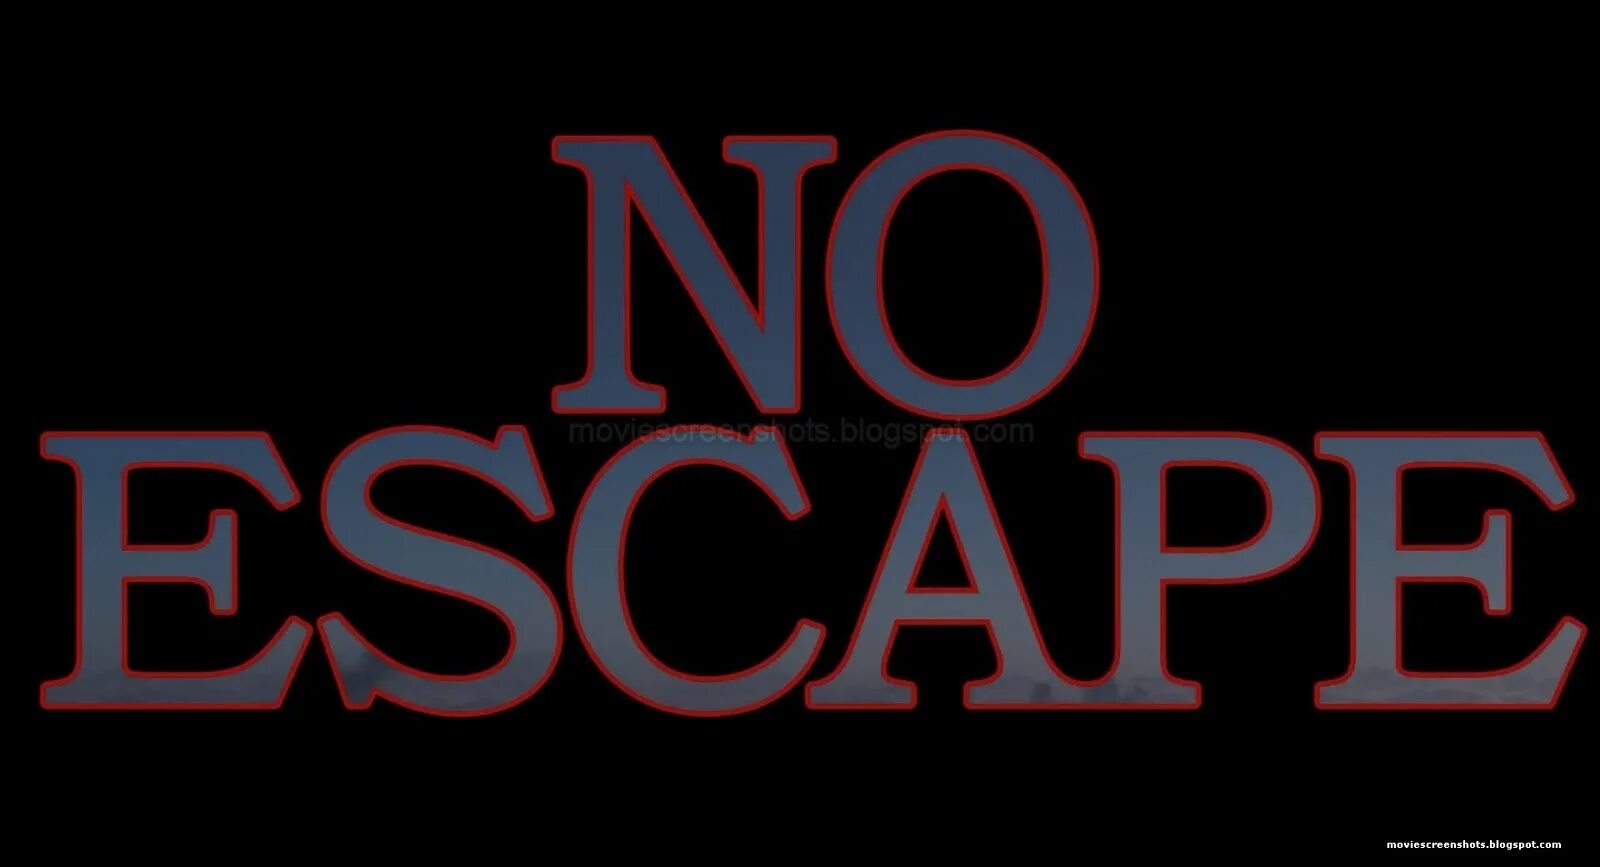 No one escapes justice. No Escape. No Escape картинка. No Escape надпись. No Escape kinitopet.